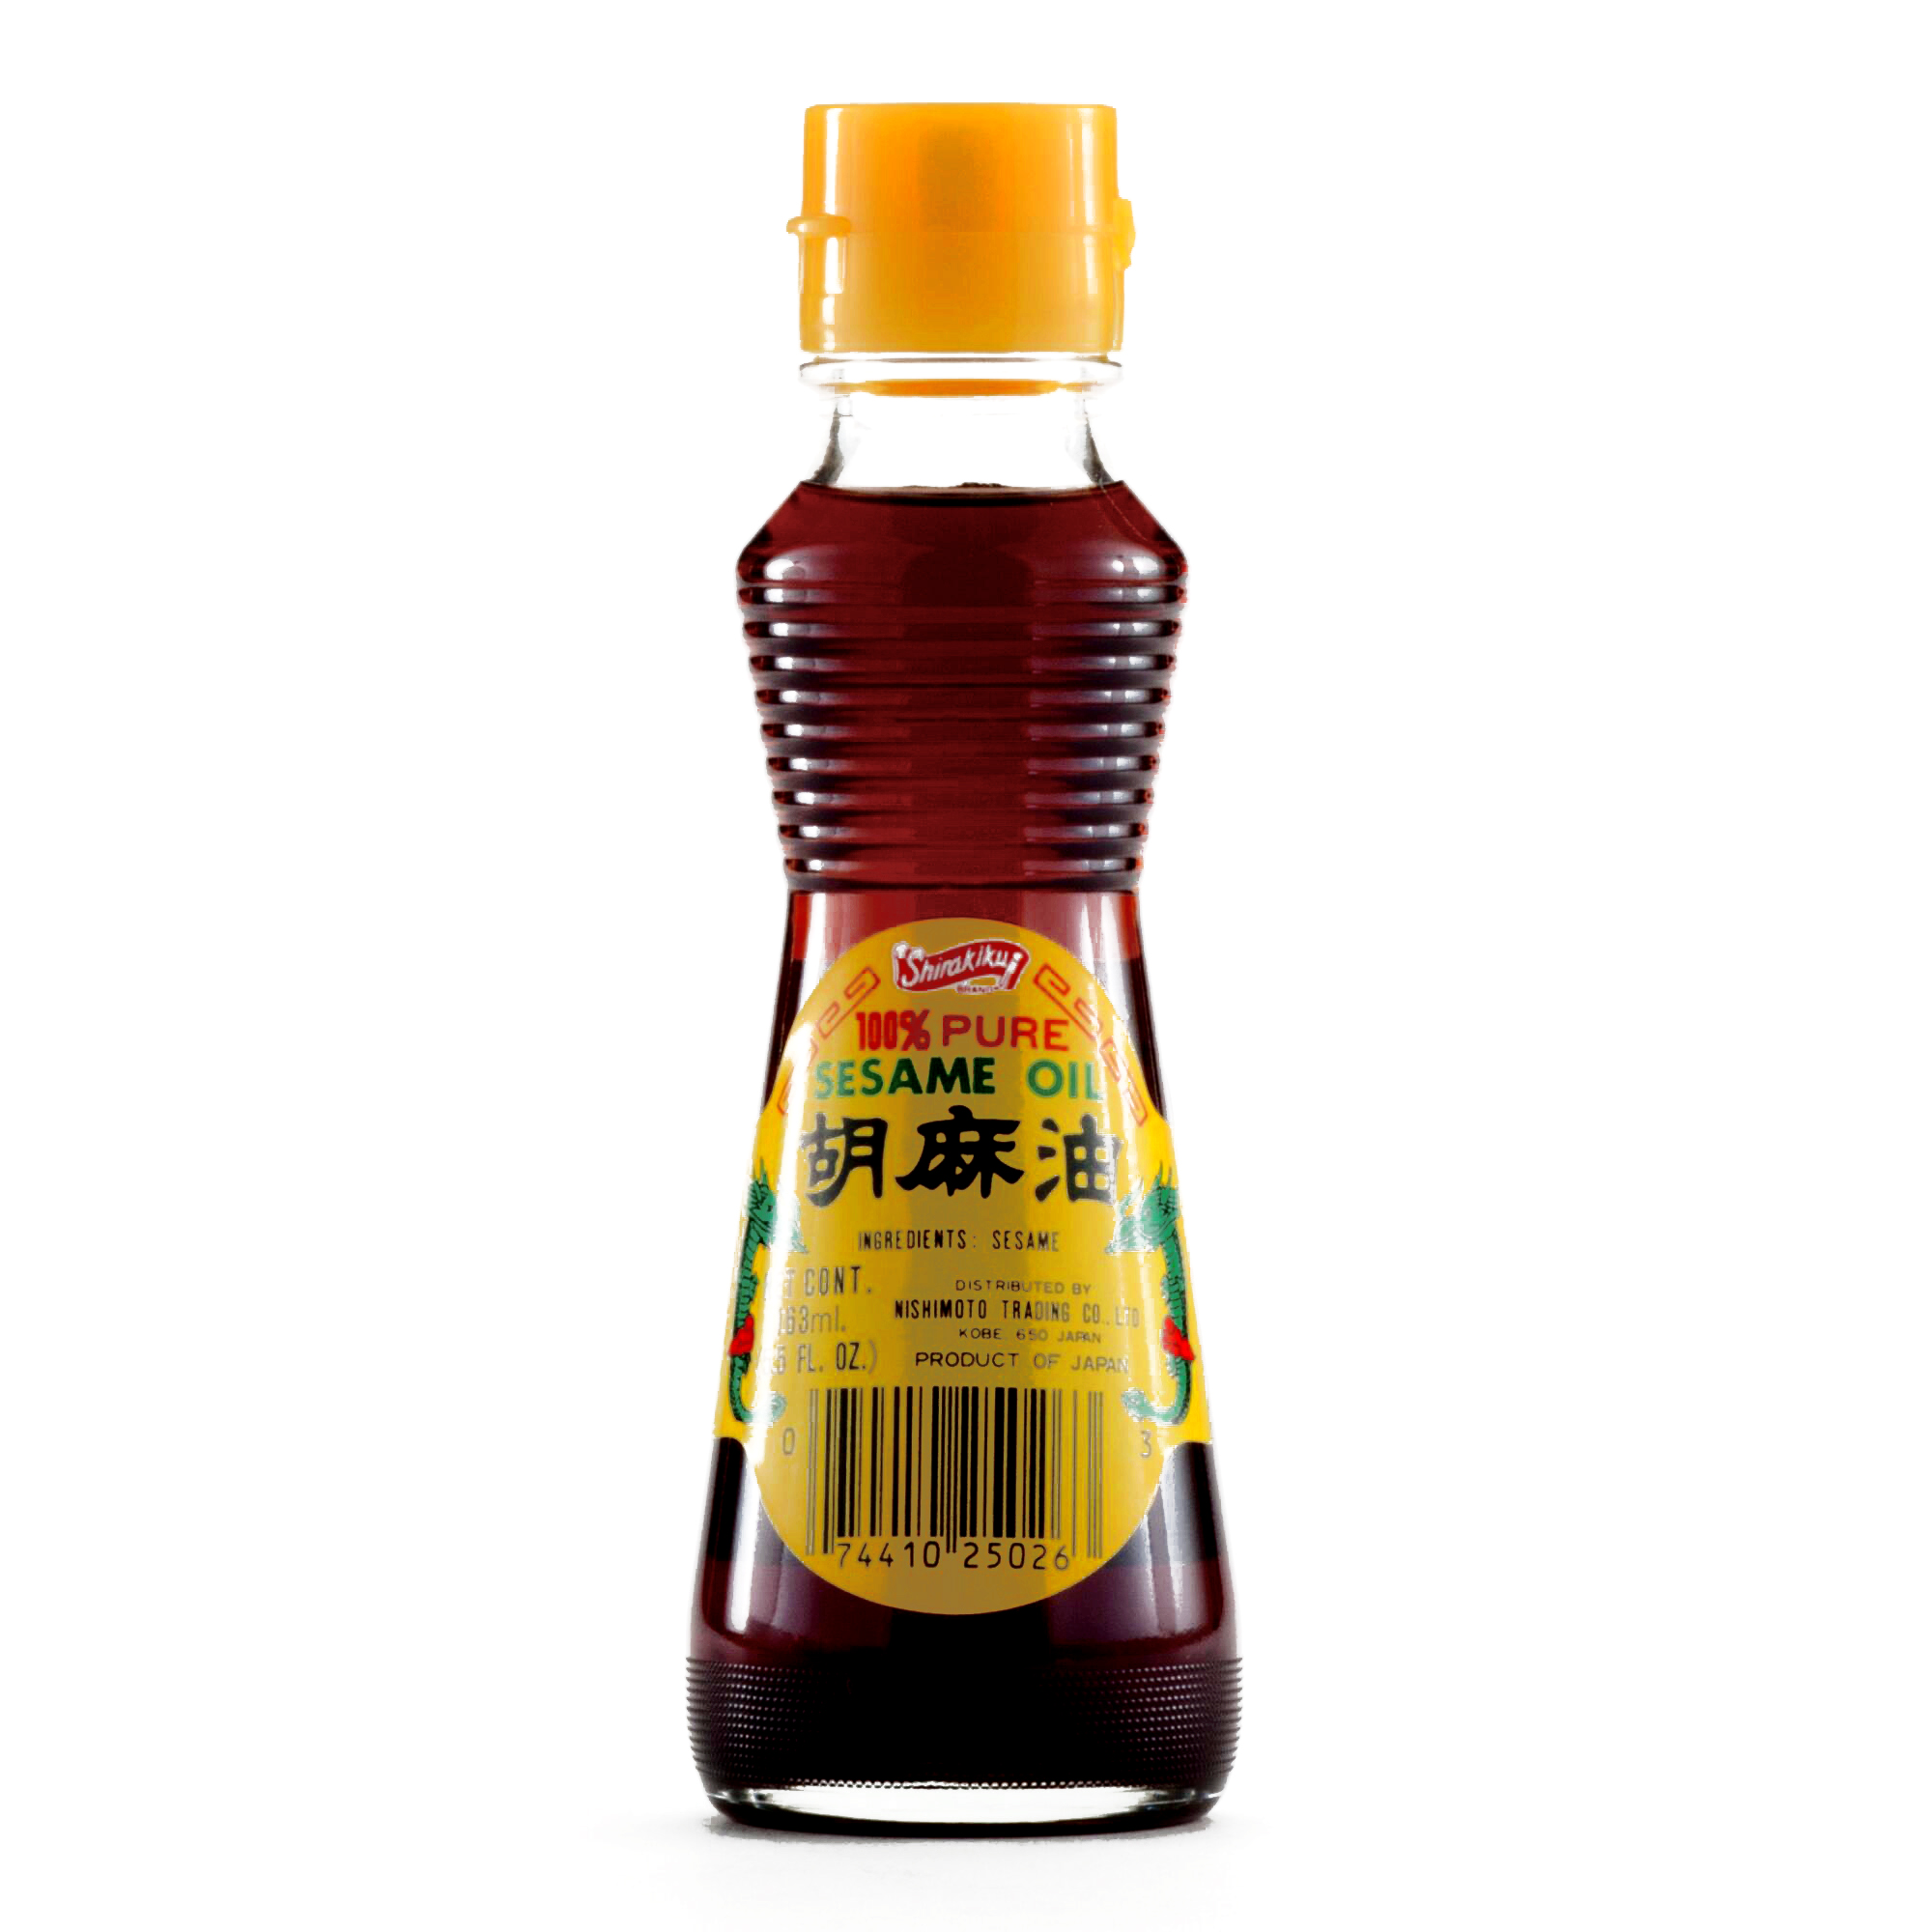 Shirakiku Sesame Oil 5.5 oz each (1 Item Per Order) - Walmart.com ...